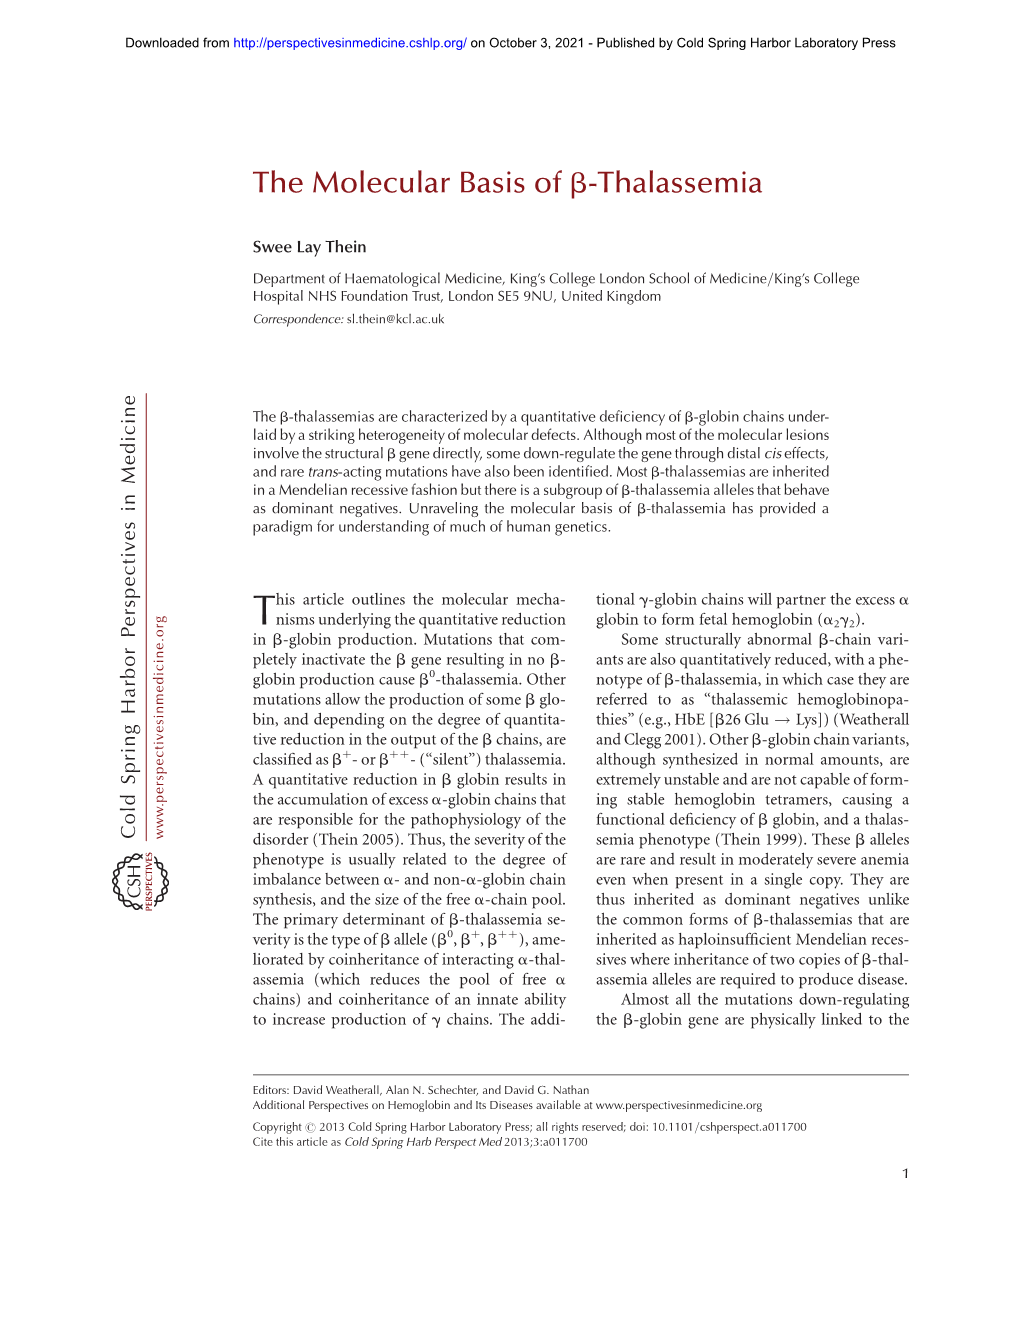 The Molecular Basis of B-Thalassemia